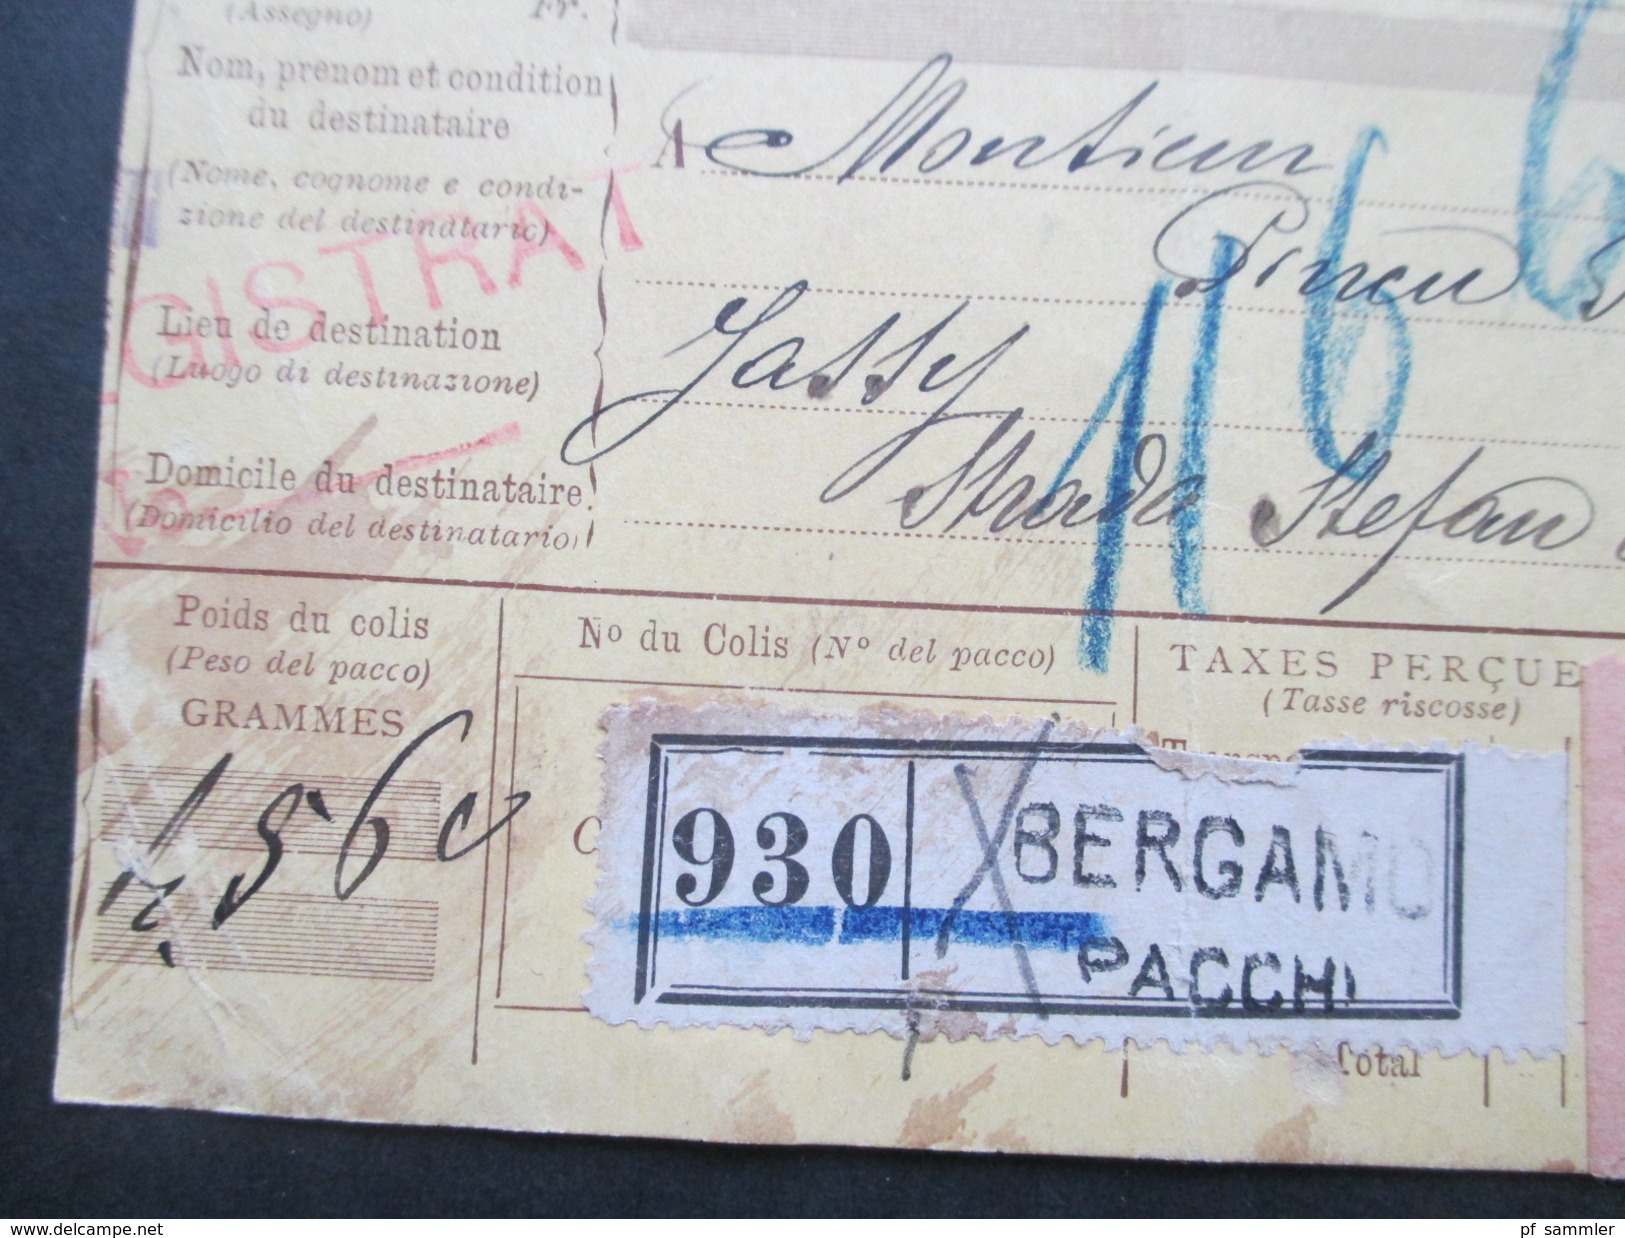 Italien 1911 Paketkarte Klebezettel: Italien über Pontafel Zollgut Zu Stellen In Itzkany. Ufizio Italiano Di Uscita - Pacchi Postali